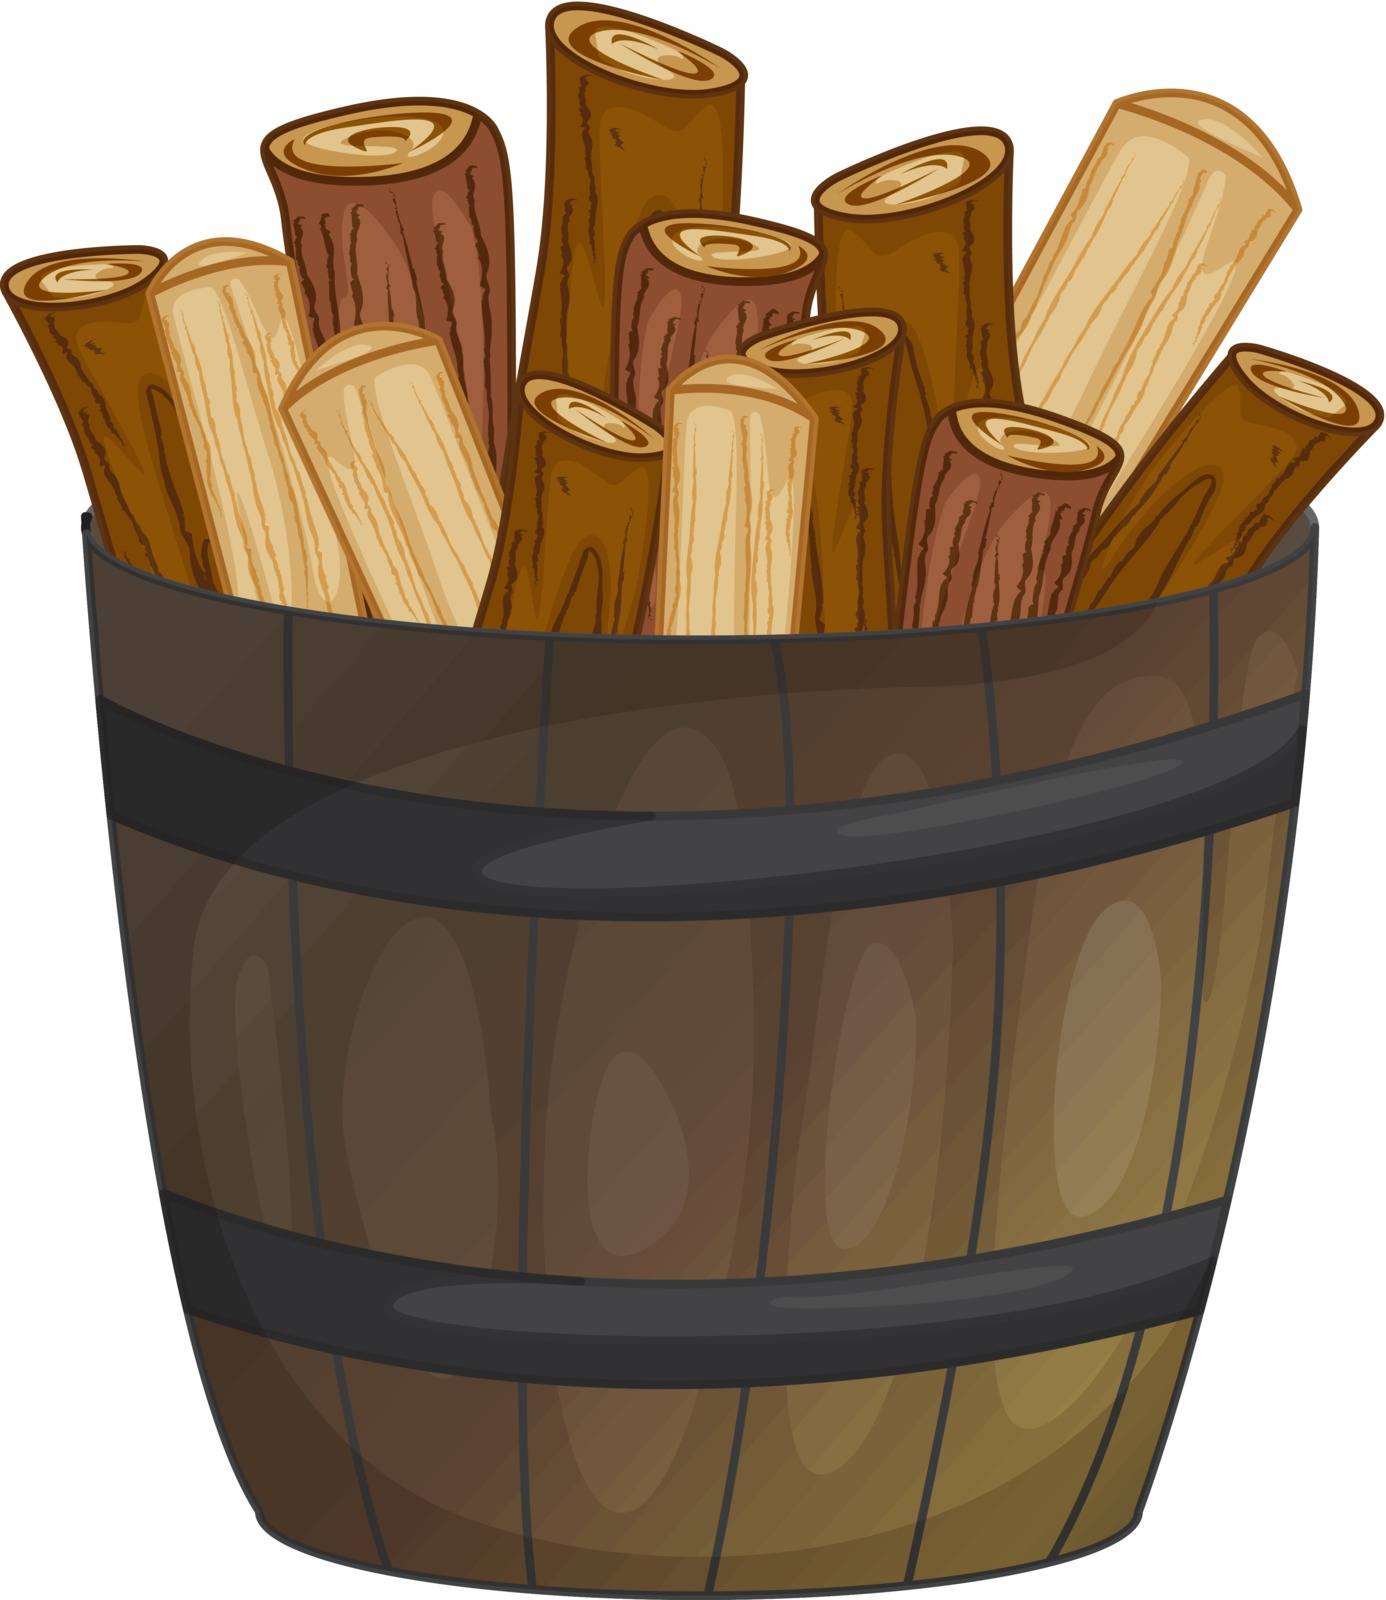 illustration of a barrel of wood